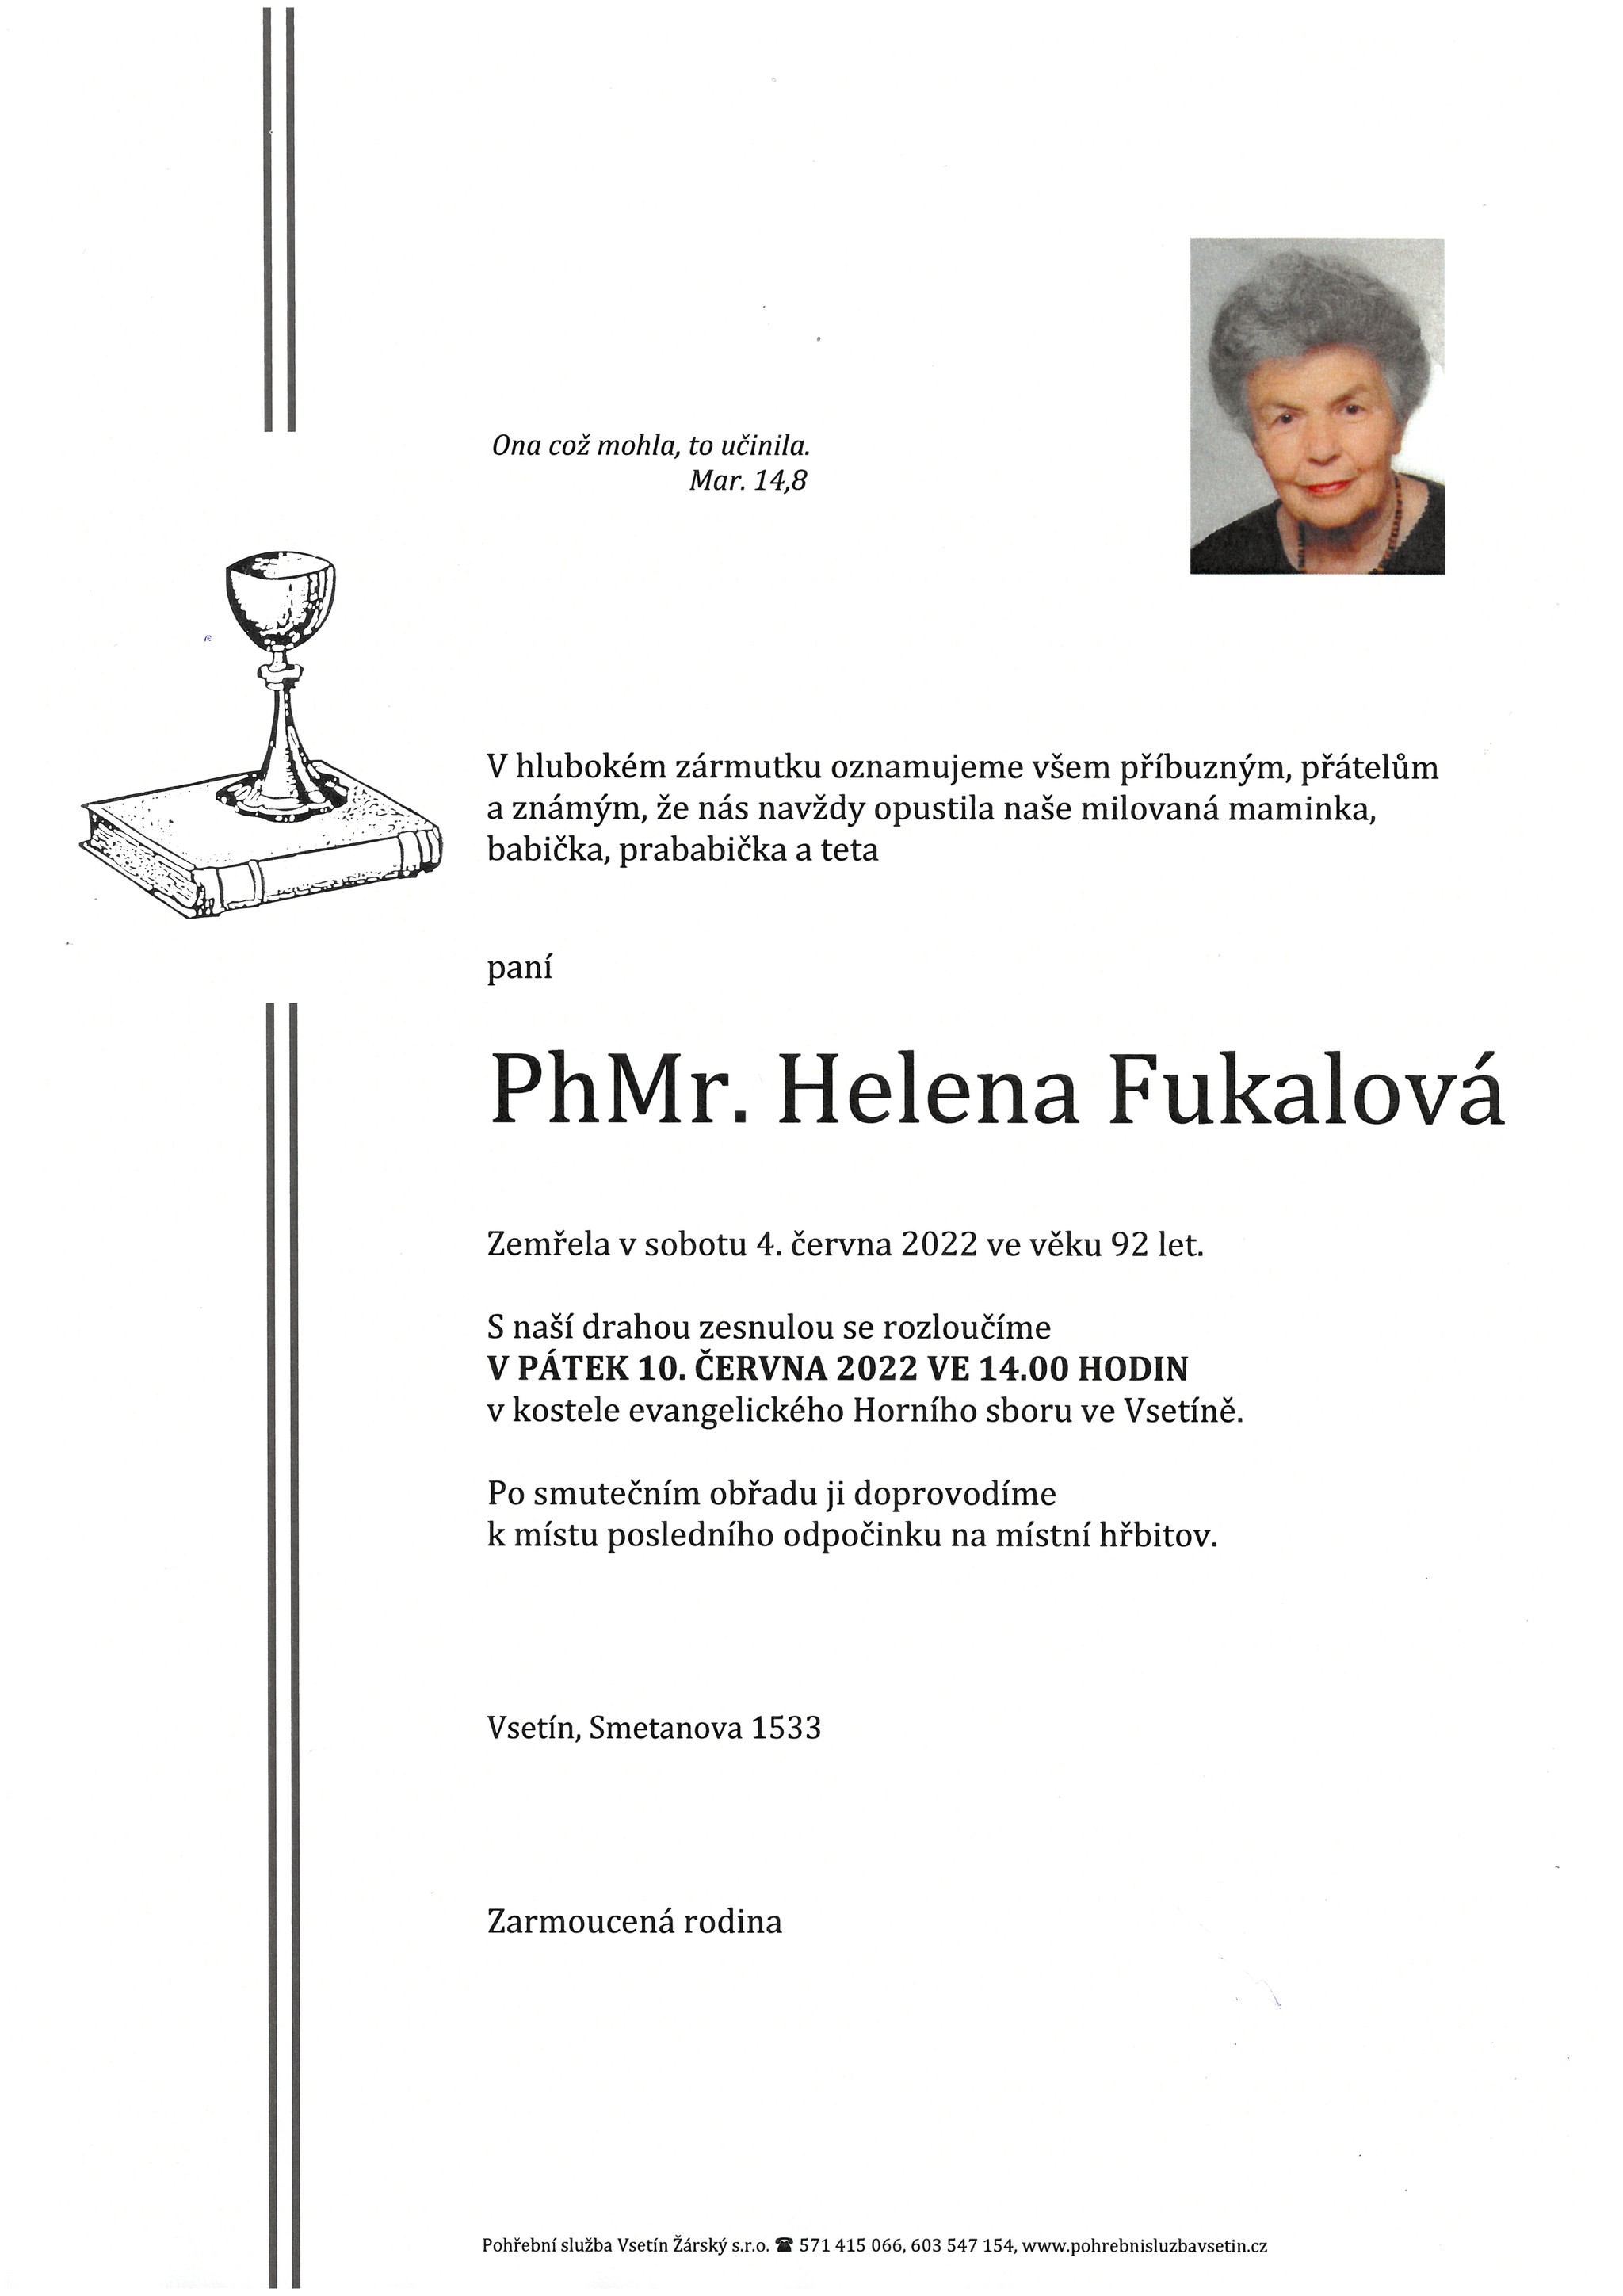 PhMr. Helena Fukalová